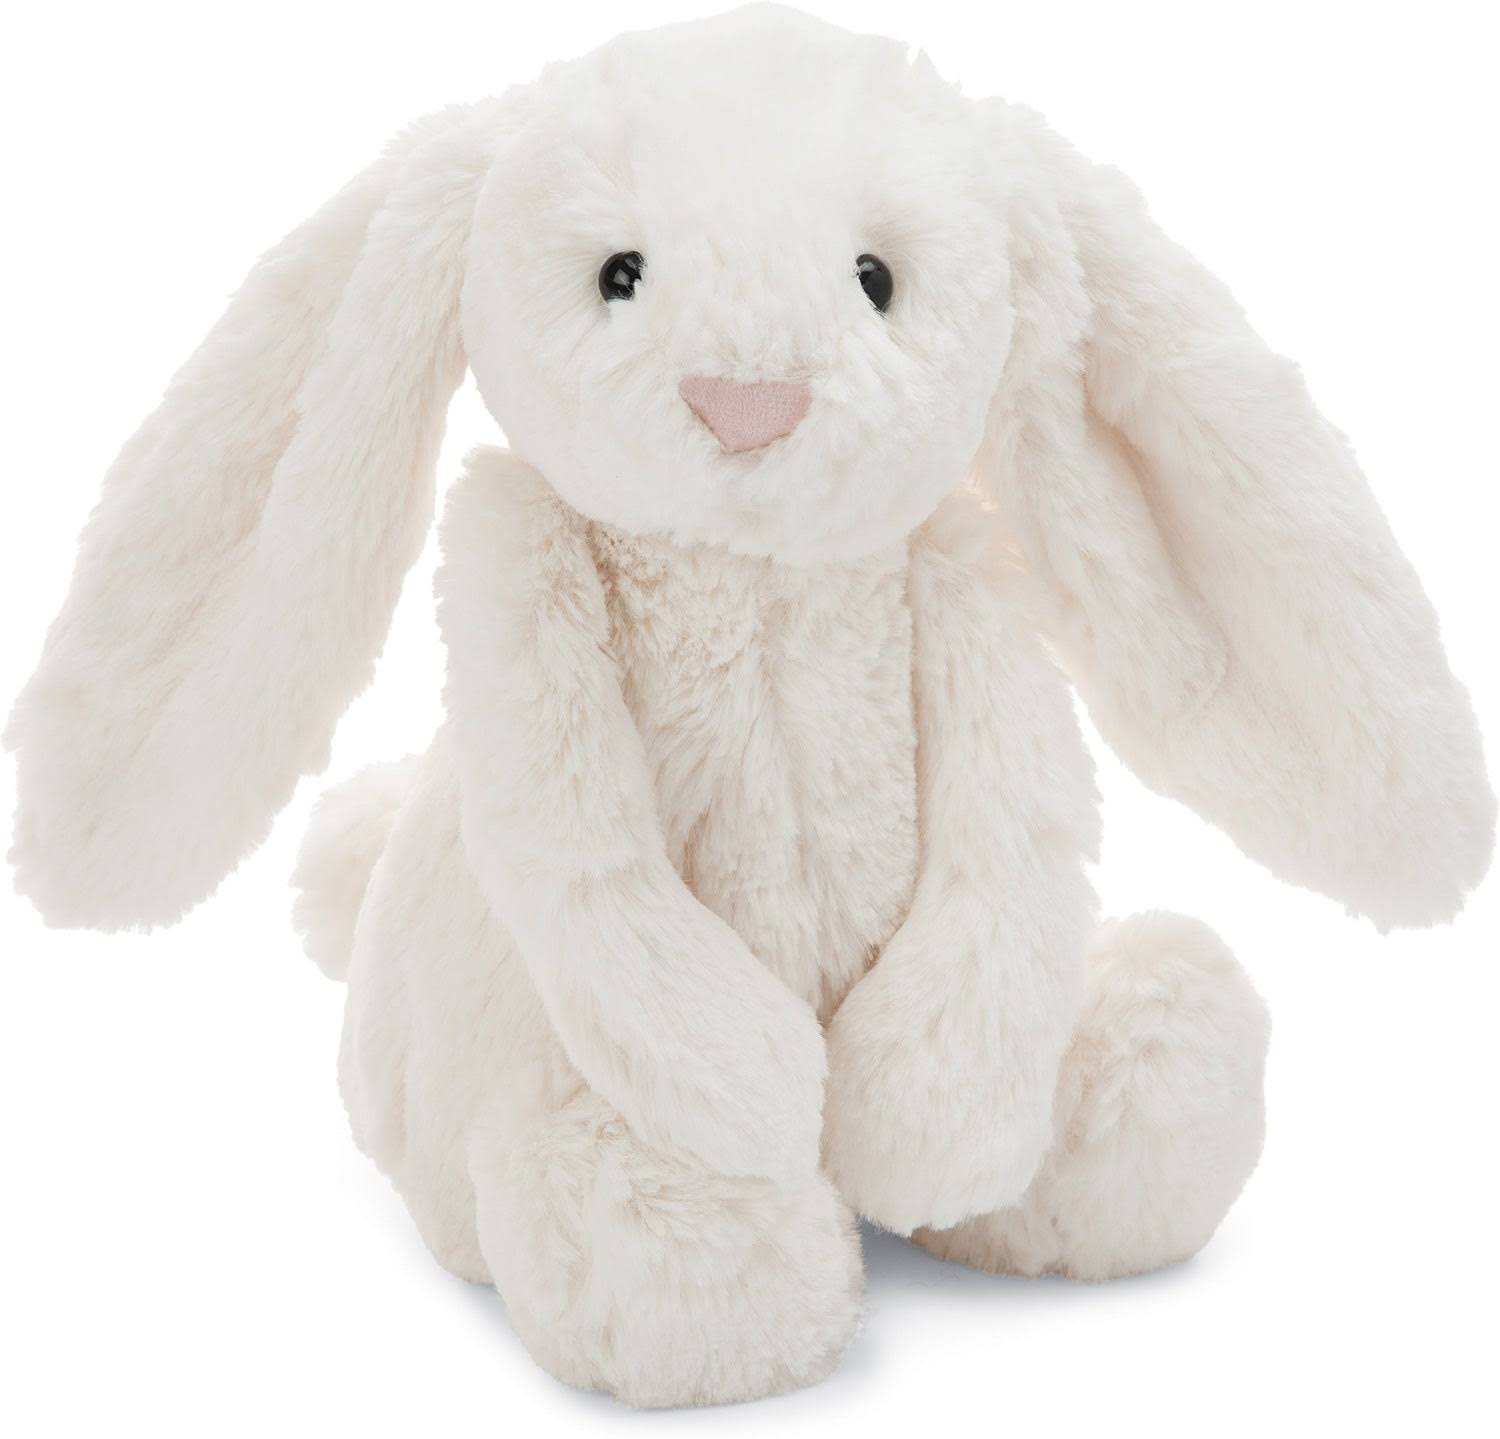 Jellycat Bashful Bunny Soft Toy - Medium, Cream, 12"